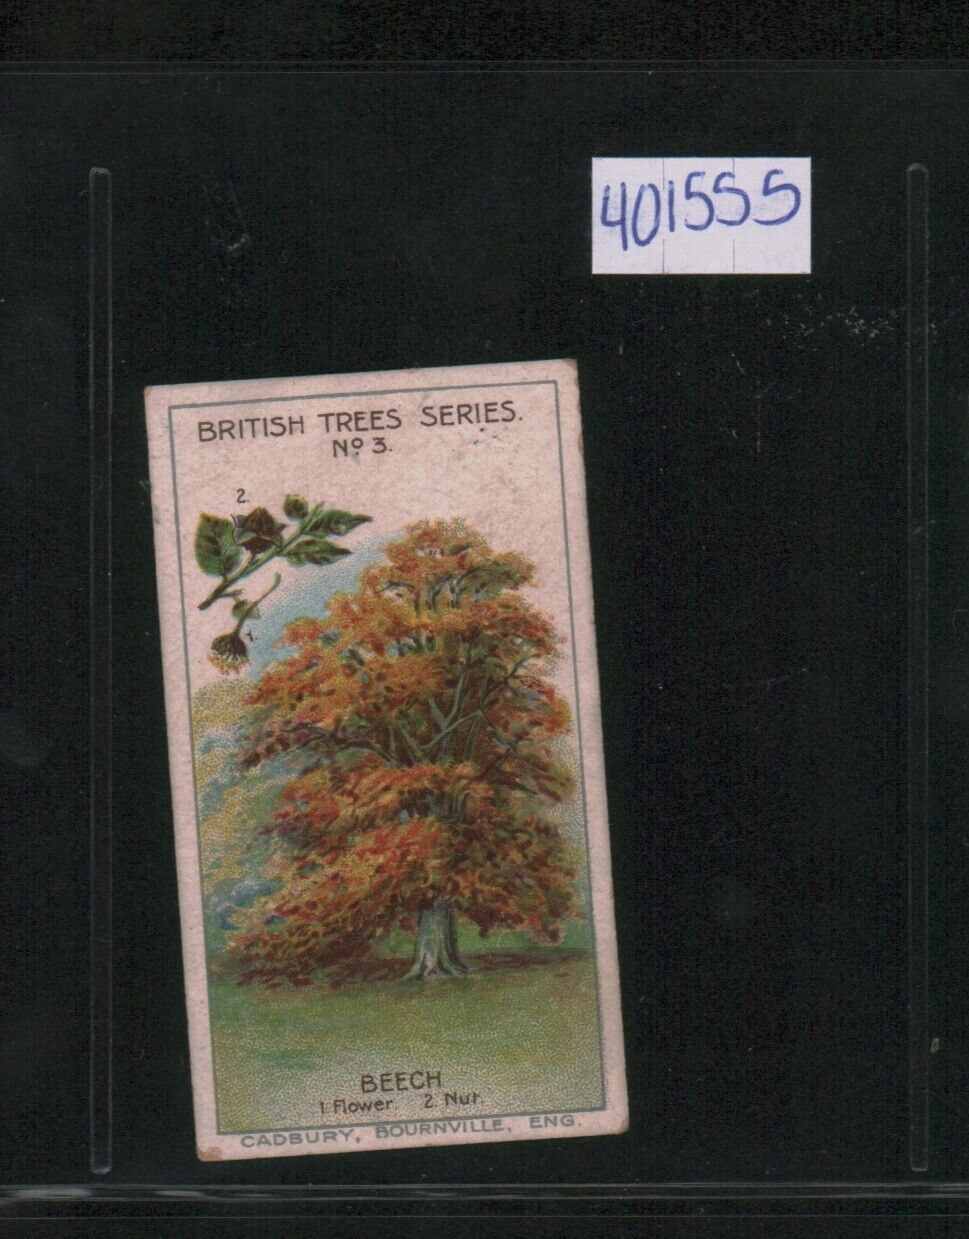 1911 Cadbury\'s Bournville British Trees - #3 Beech (401555)